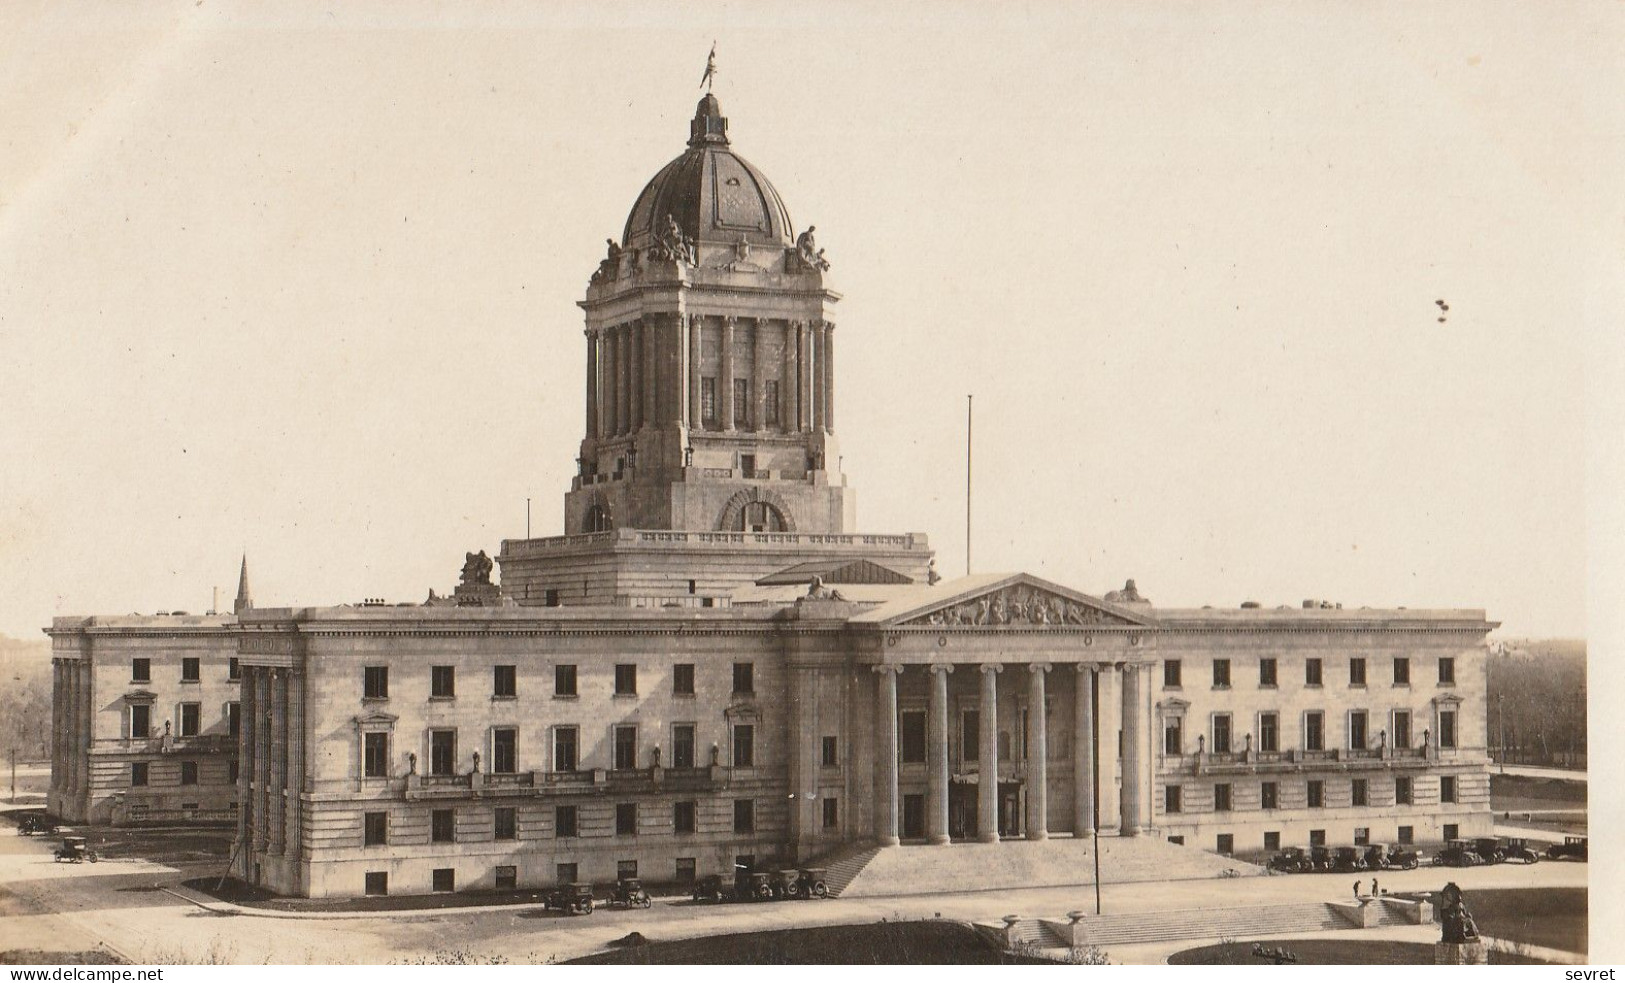 WINNIPEG - Parliament   Bulding - Winnipeg